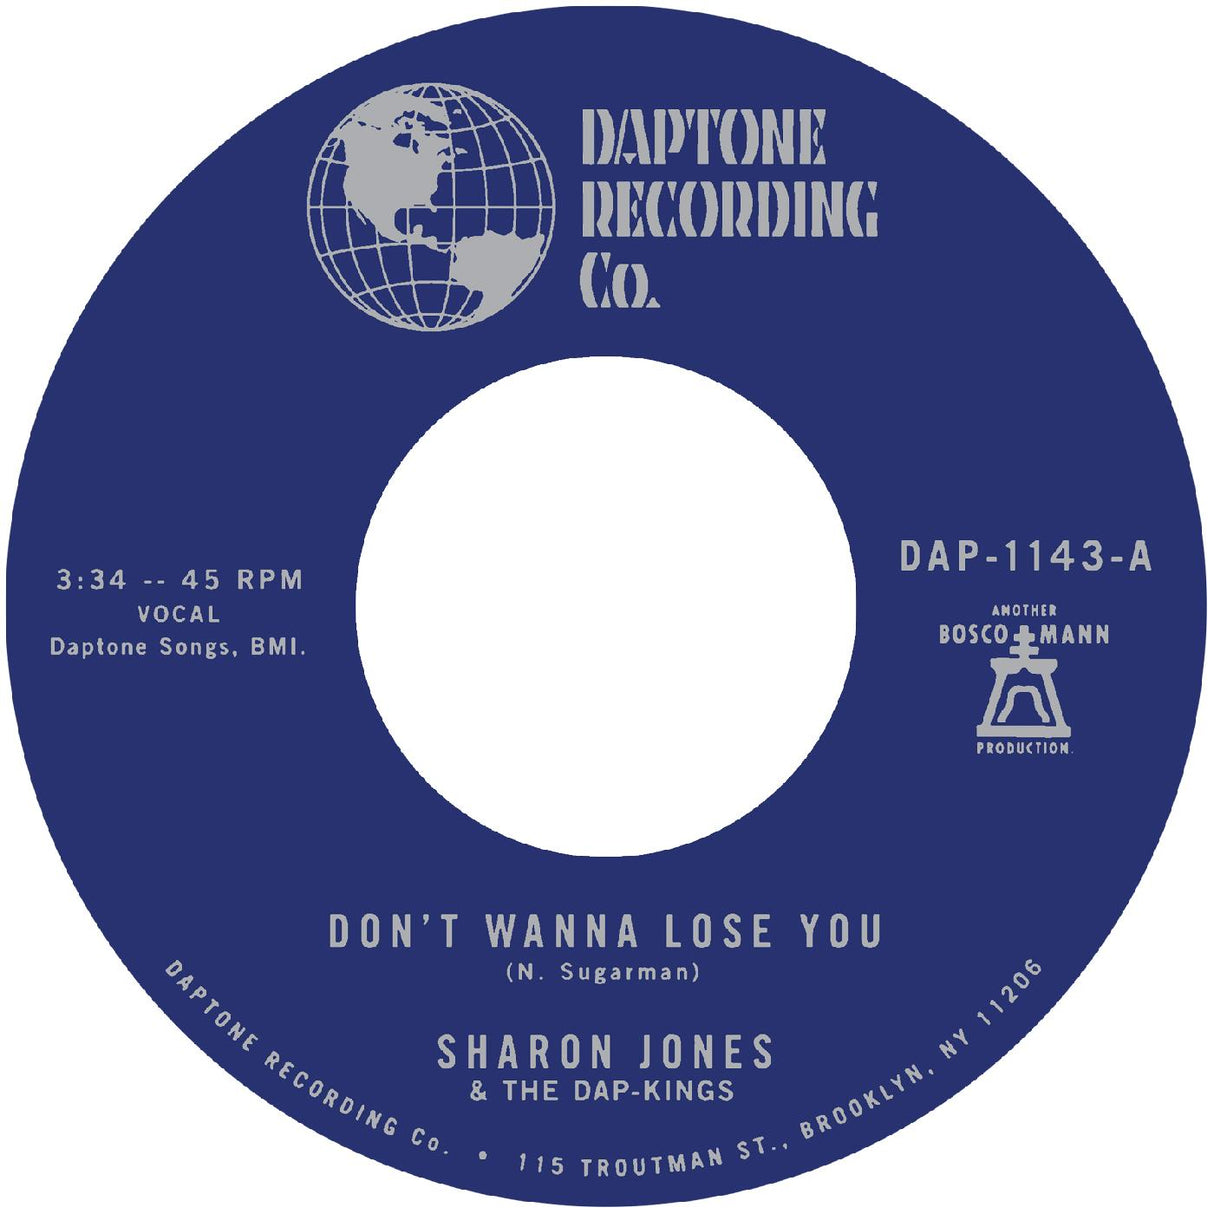 Don't Want To Lose You b/w Don't Give a Friend a Number [Vinyl]